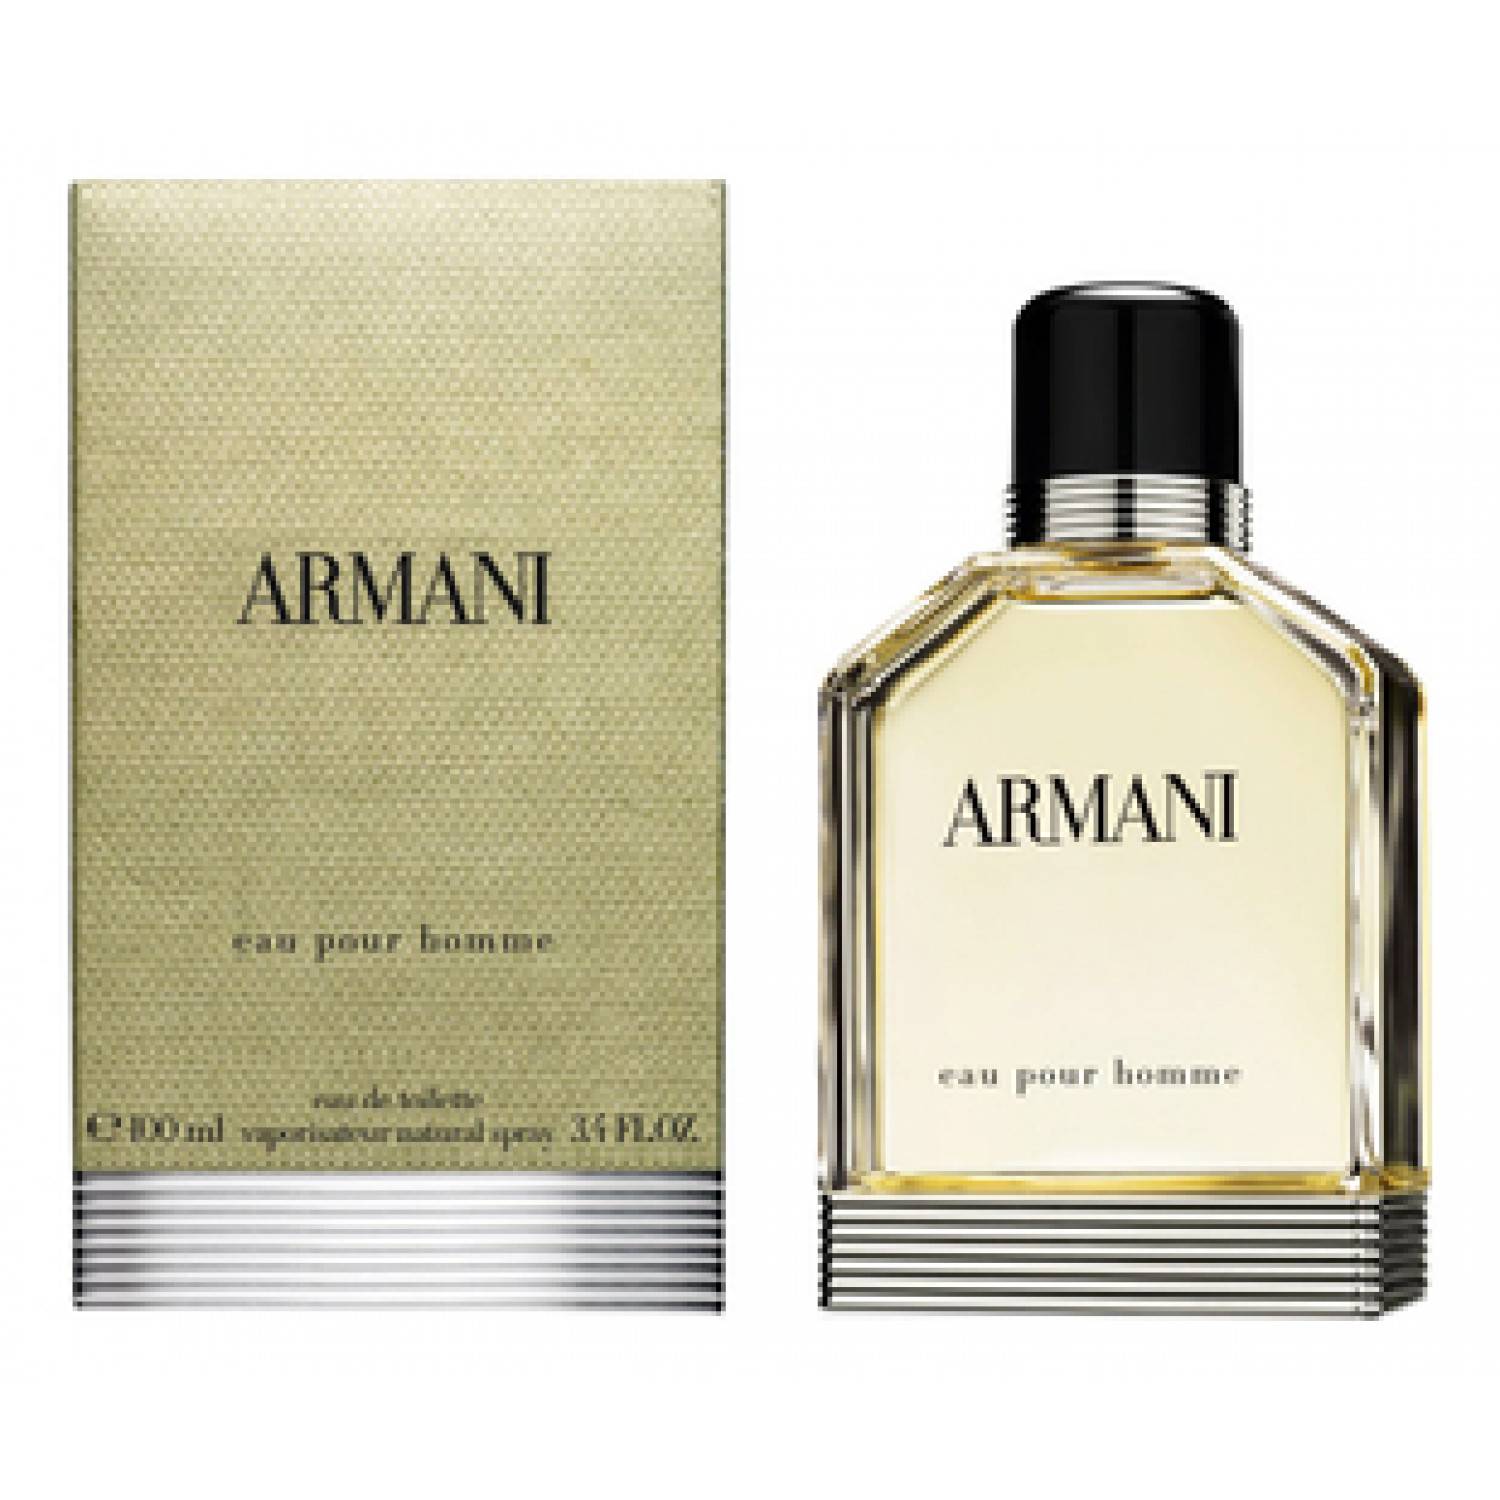 Описание парфюмов sì от giorgio armani: парфюмерная и туалетная вода, intense и fiori, фланкер passione, фото, отзывы, ноты композиции